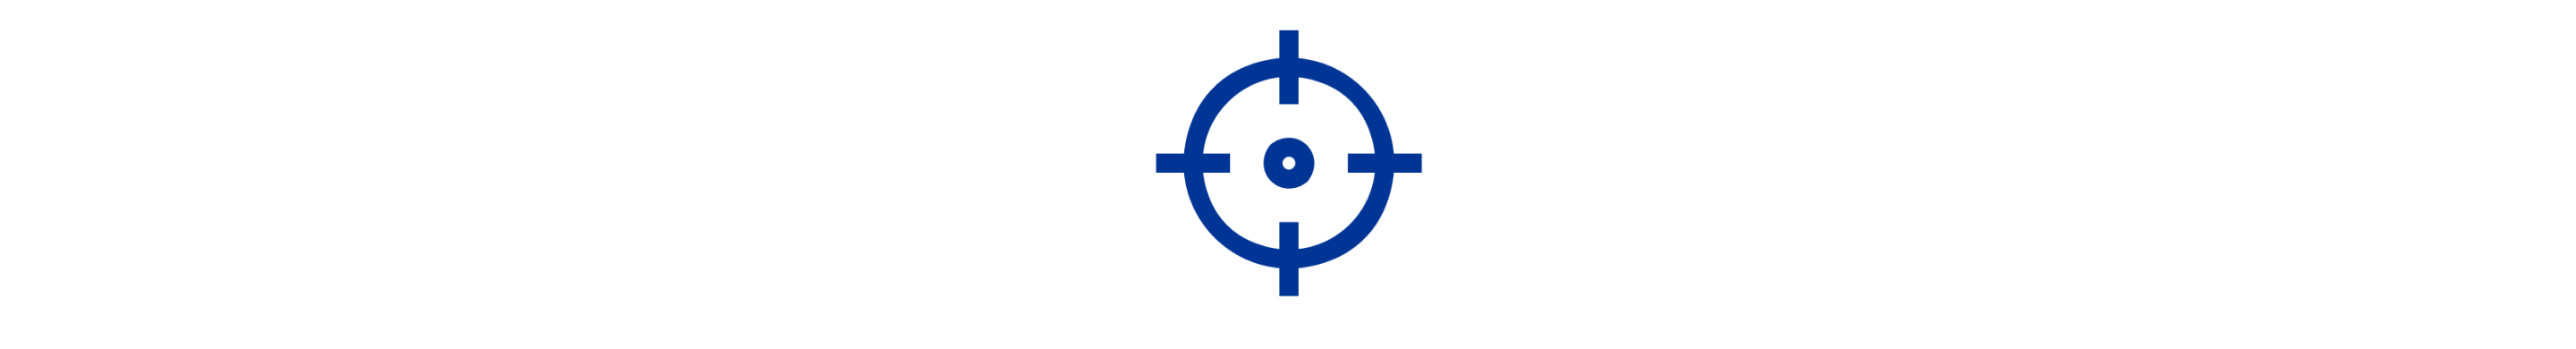 A blue icon of a bullseye target